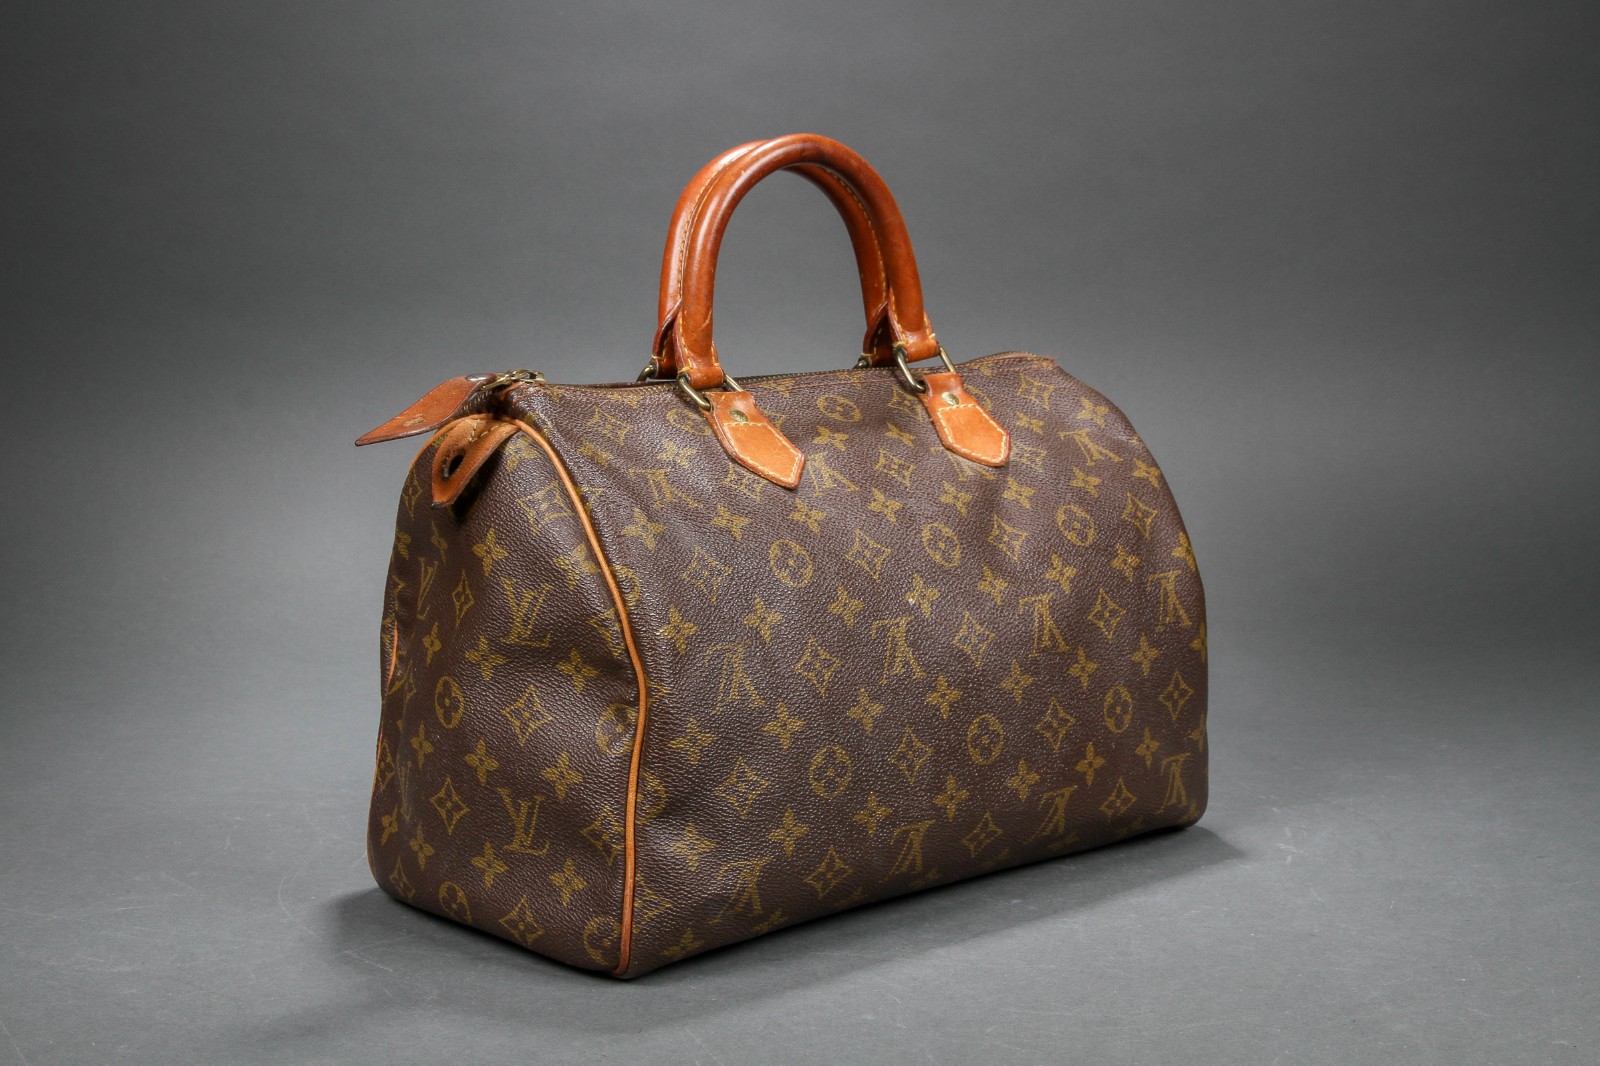 Sold at Auction: Louis Vuitton, (*) LOUIS VUITTON Handtasche Modell Speedy  since